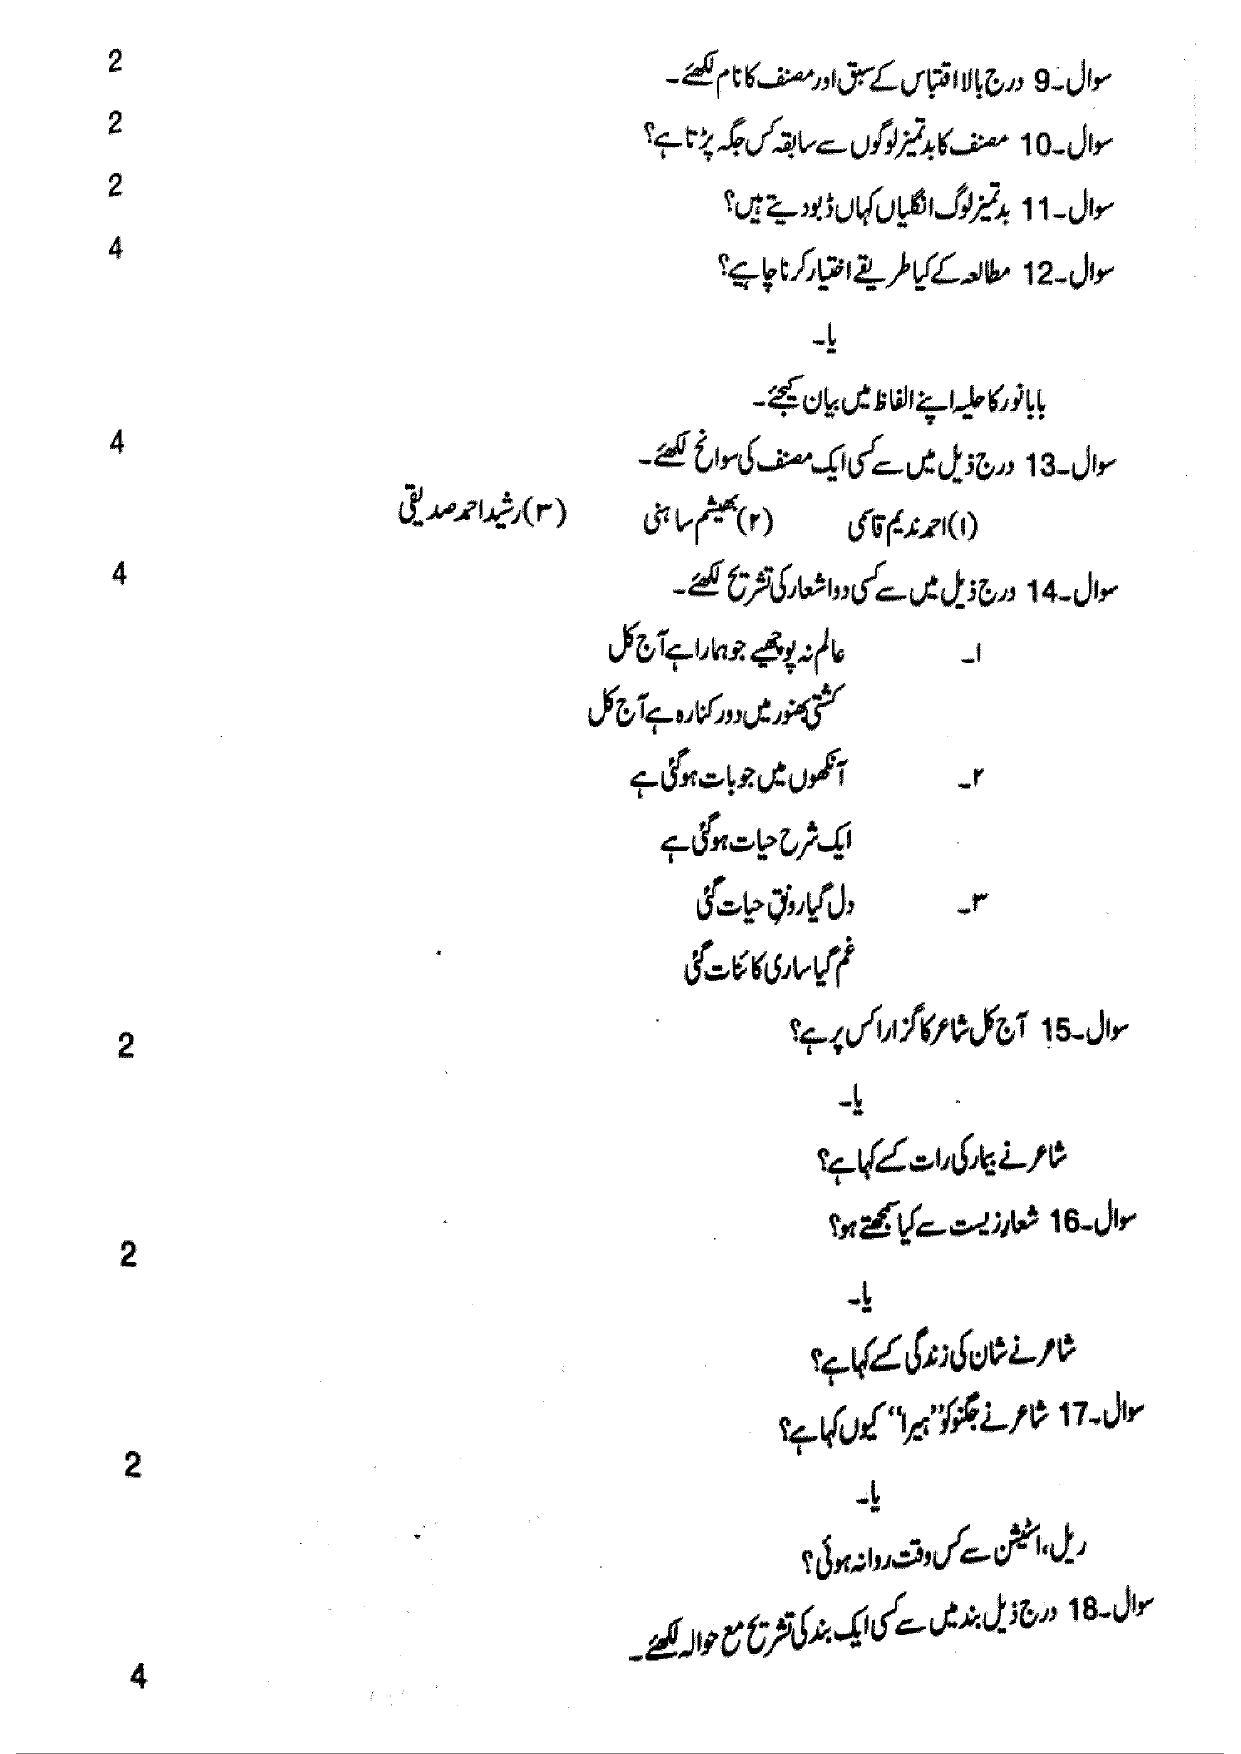 MP Board Class 12 Urdu 2019 Question Paper - Page 4